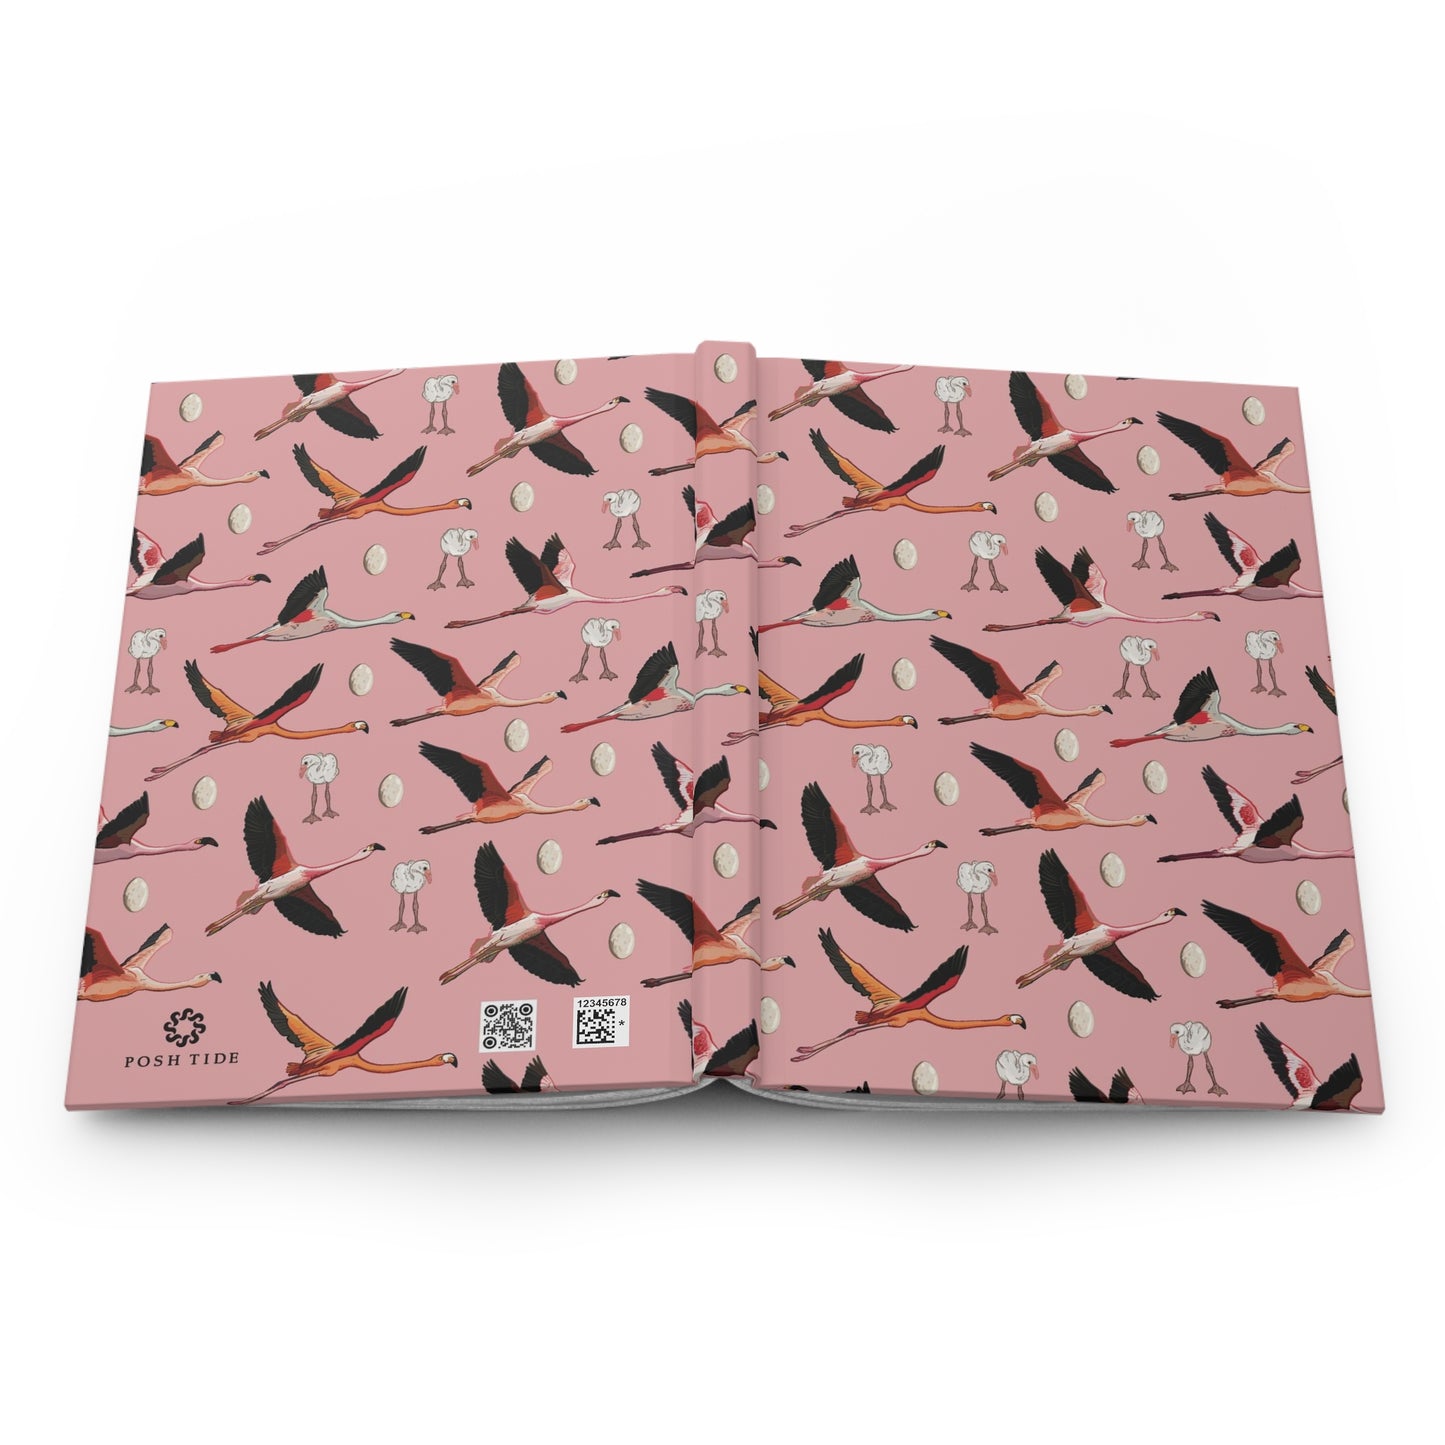 Flamingo Flying Hardcover Journal